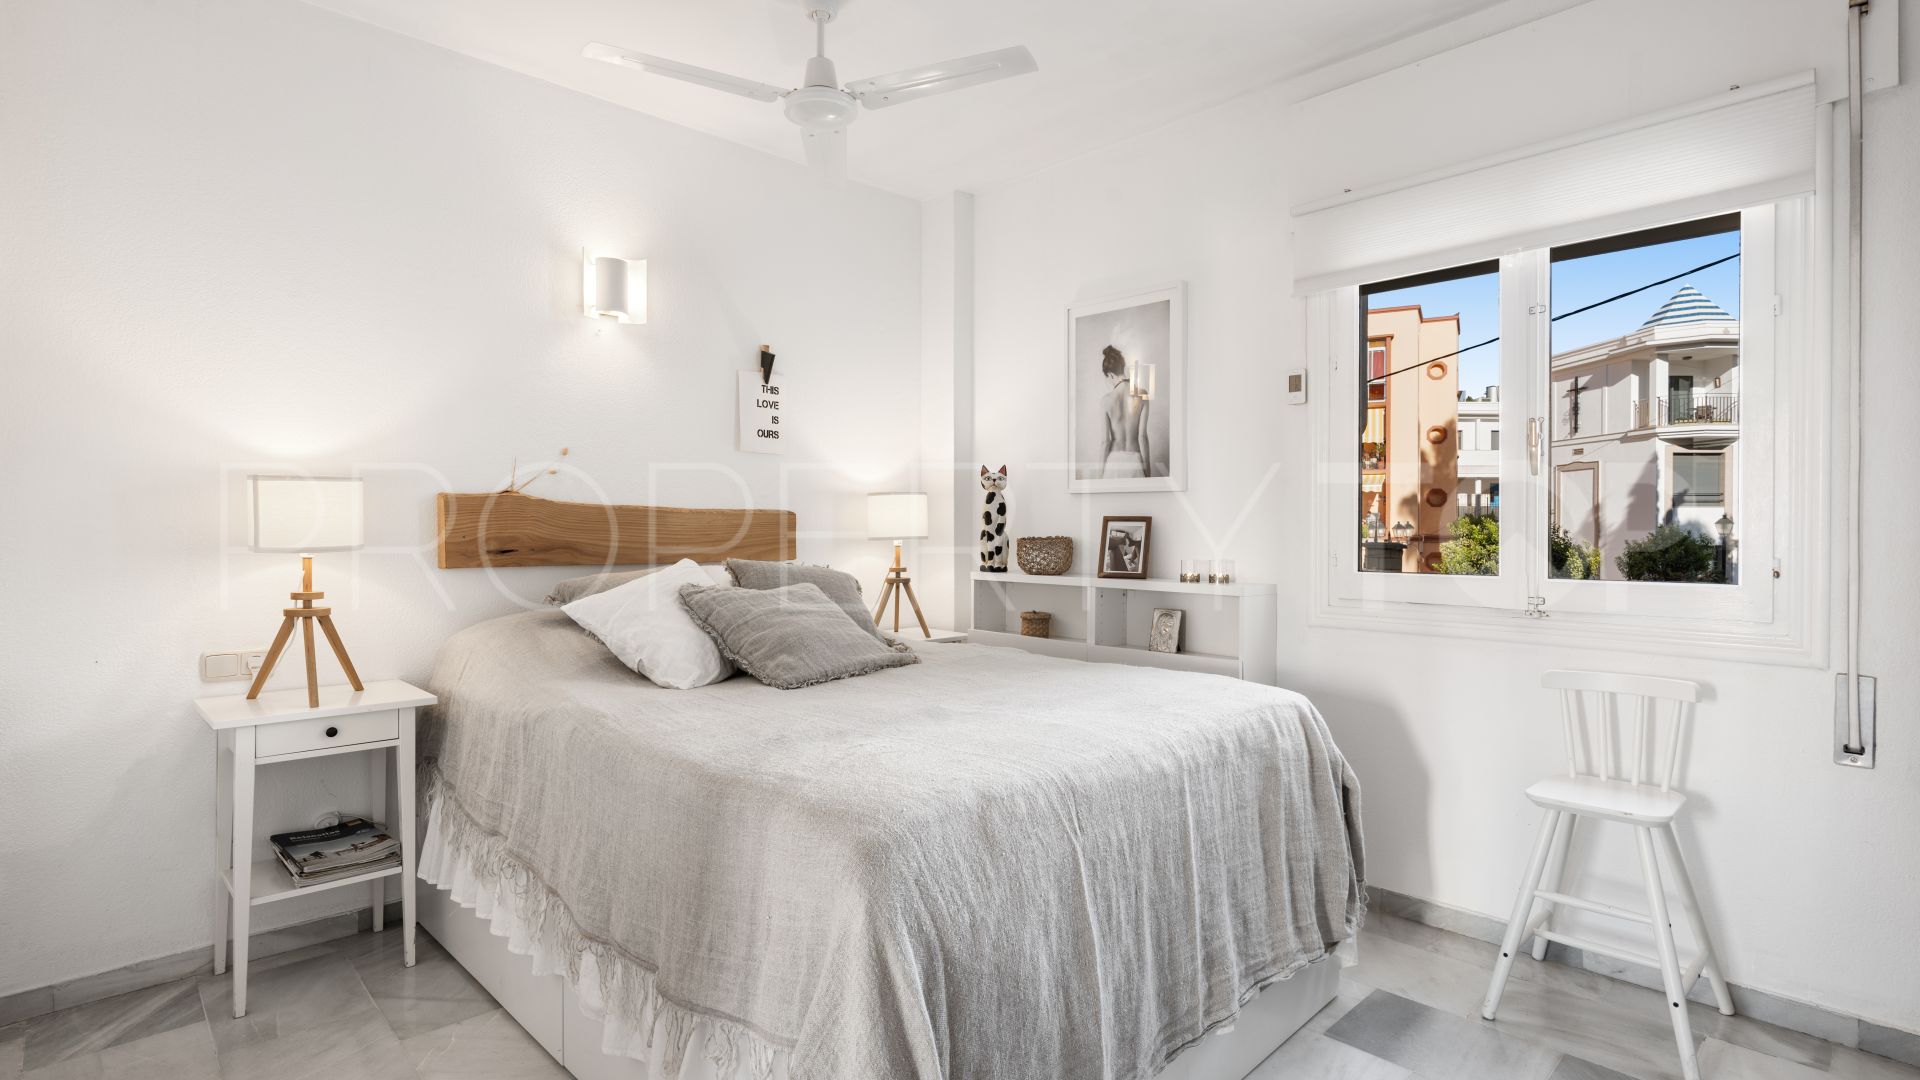 5 bedrooms apartment in Fuengirola for sale